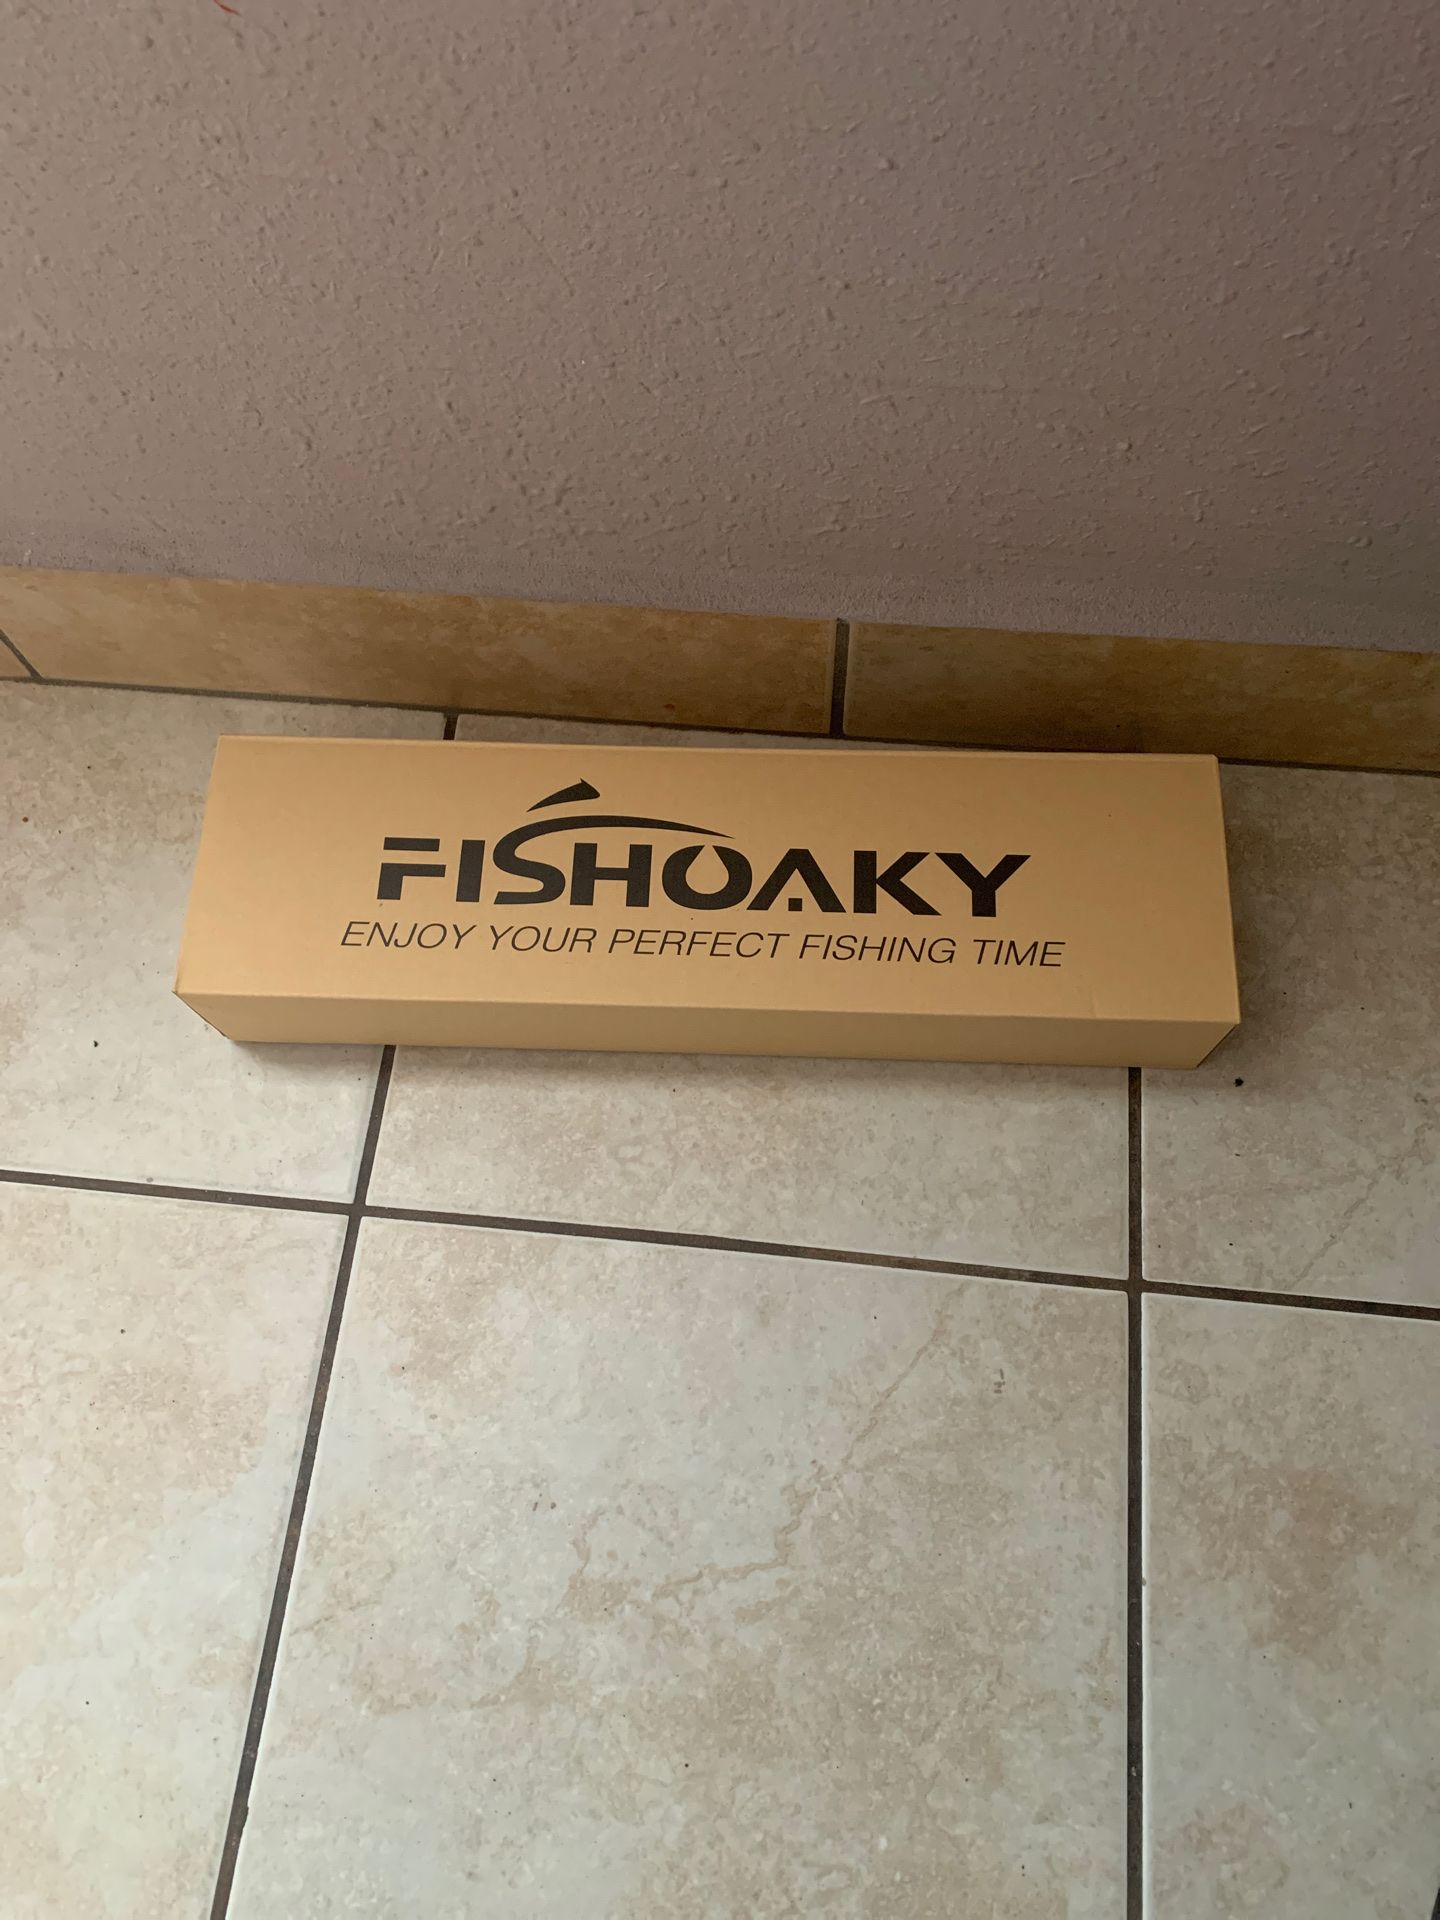 Fishoaky fishing kit.